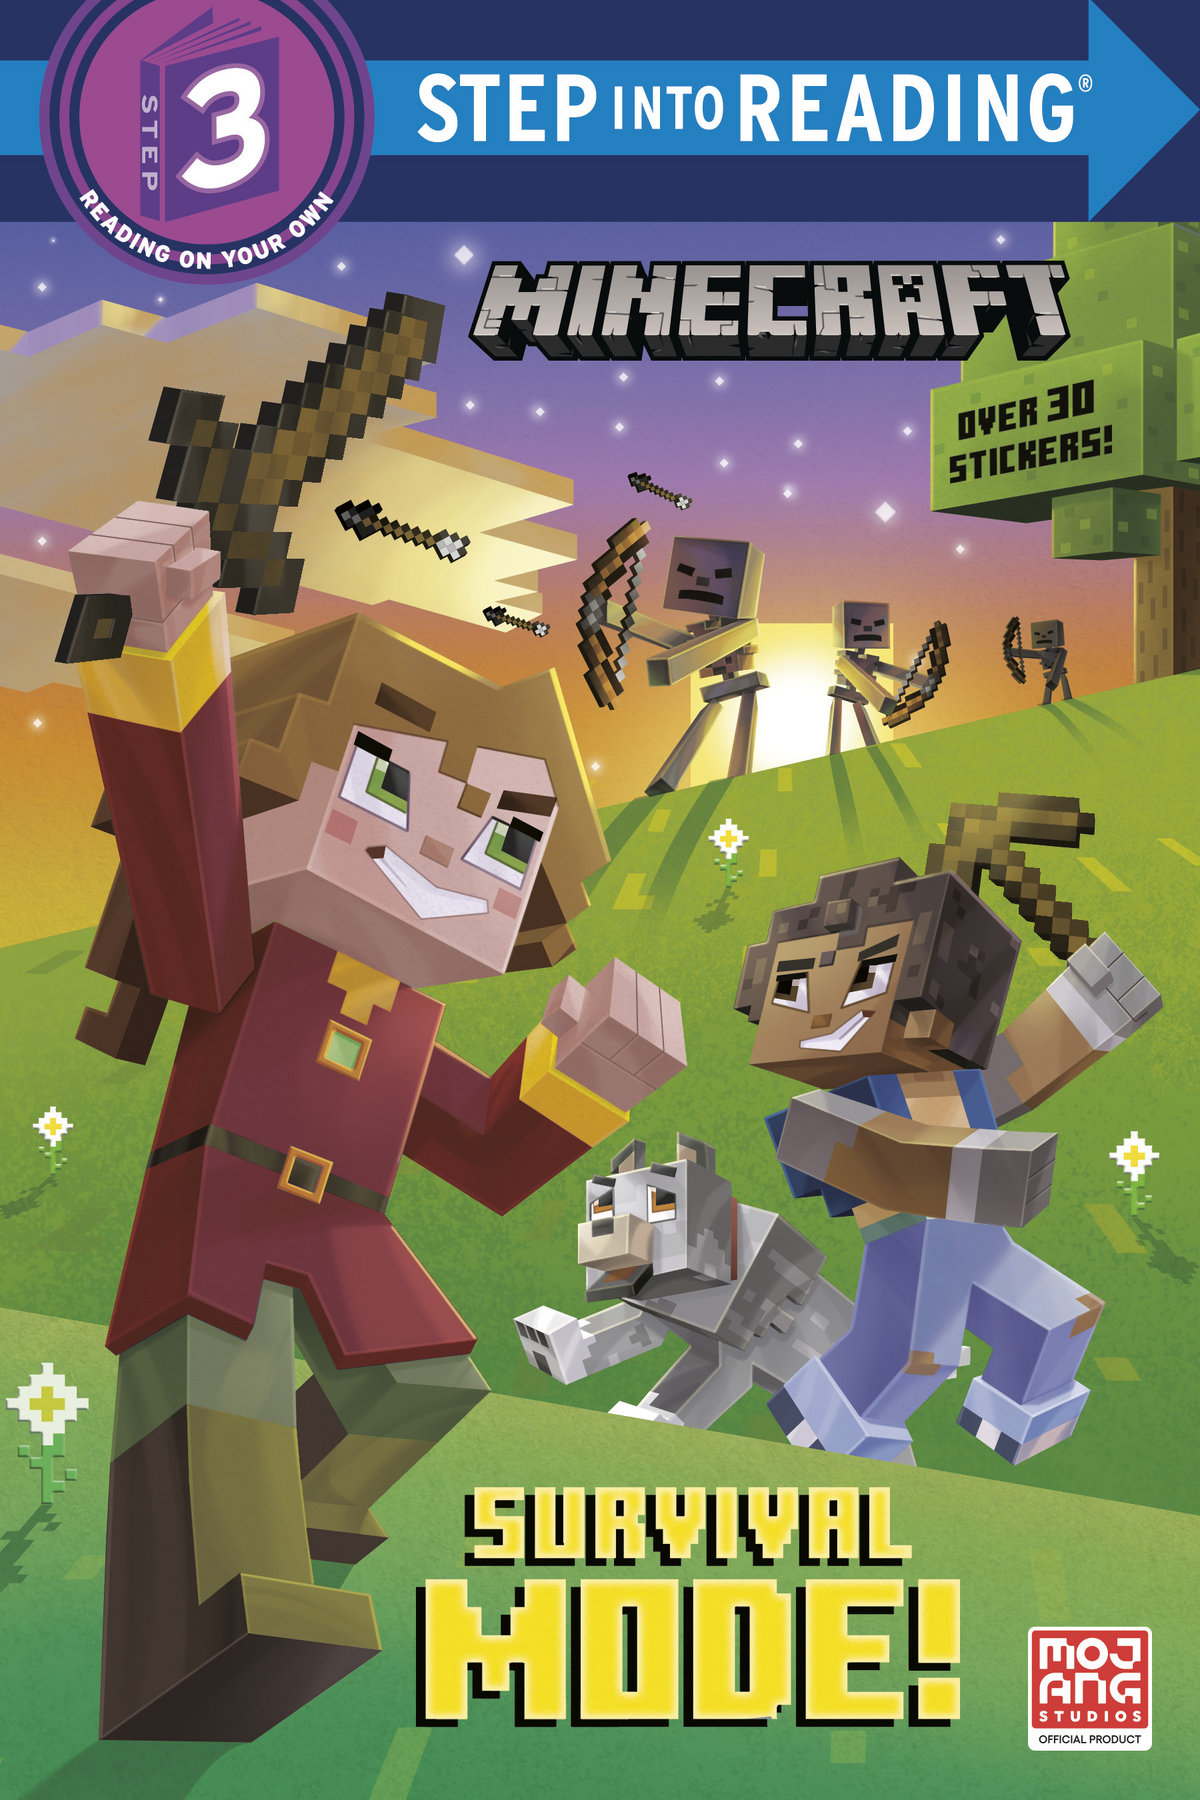 Kidscreen » Archive » Netflix to bow interactive Minecraft series